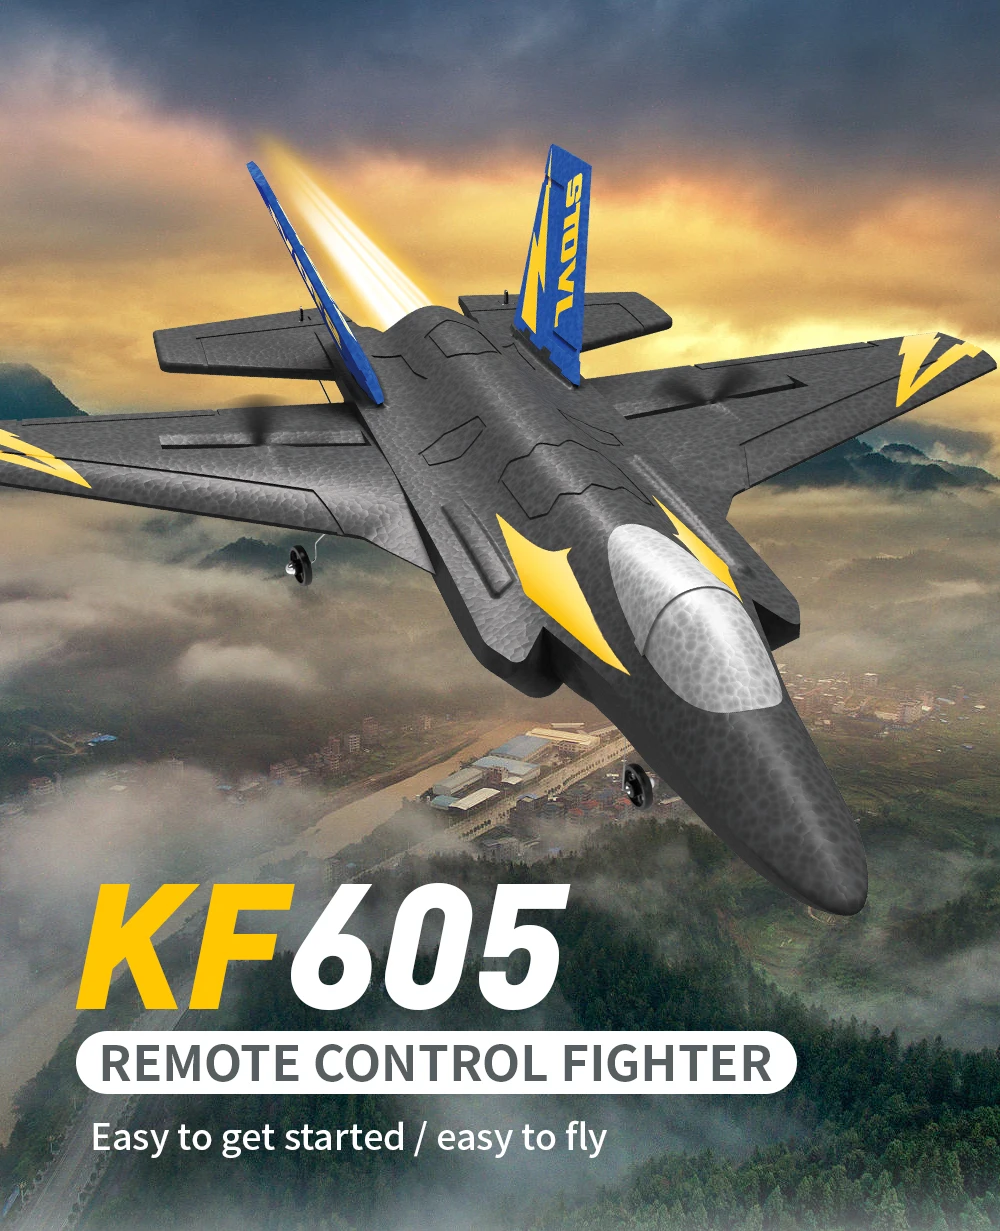 kF605 Polystyrene Glider Rc Plane Gyroscope, 1 KF6O5 REMOTE CONTROL FIGHTER Easy to start easy